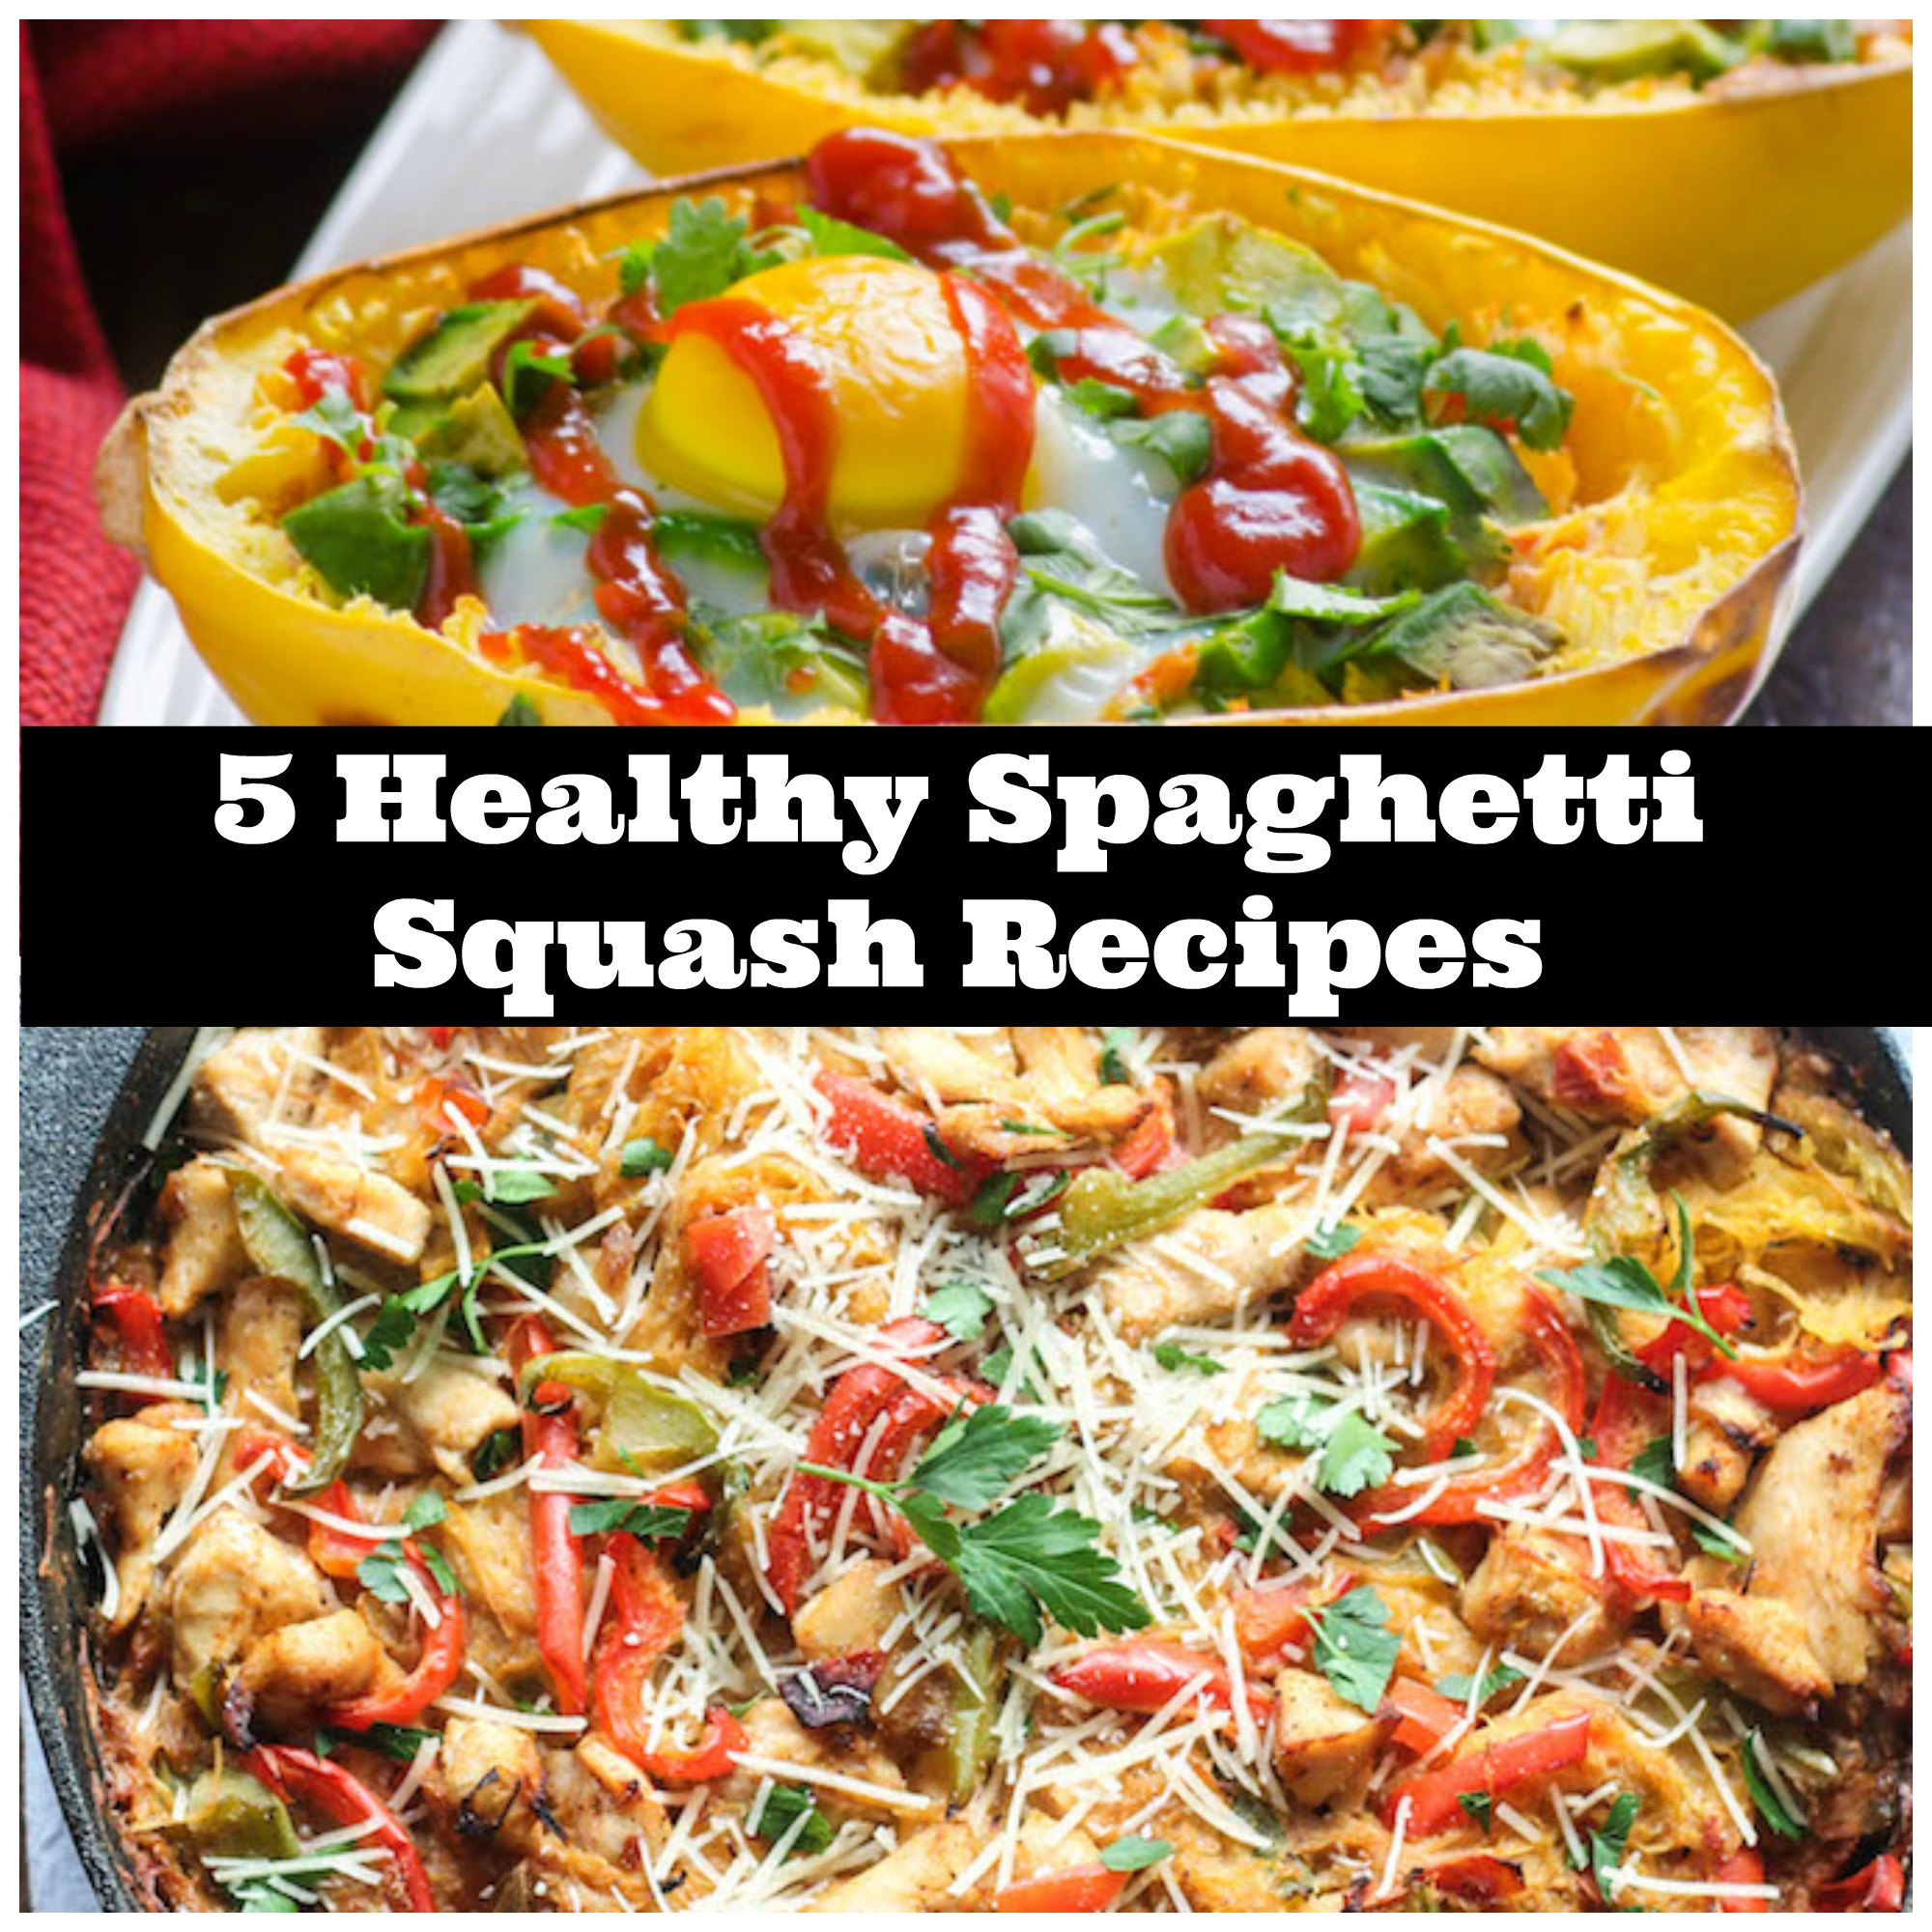 Healthy Spaghetti Squash Recipes
 5 Healthy Spaghetti Squash Recipes to Try